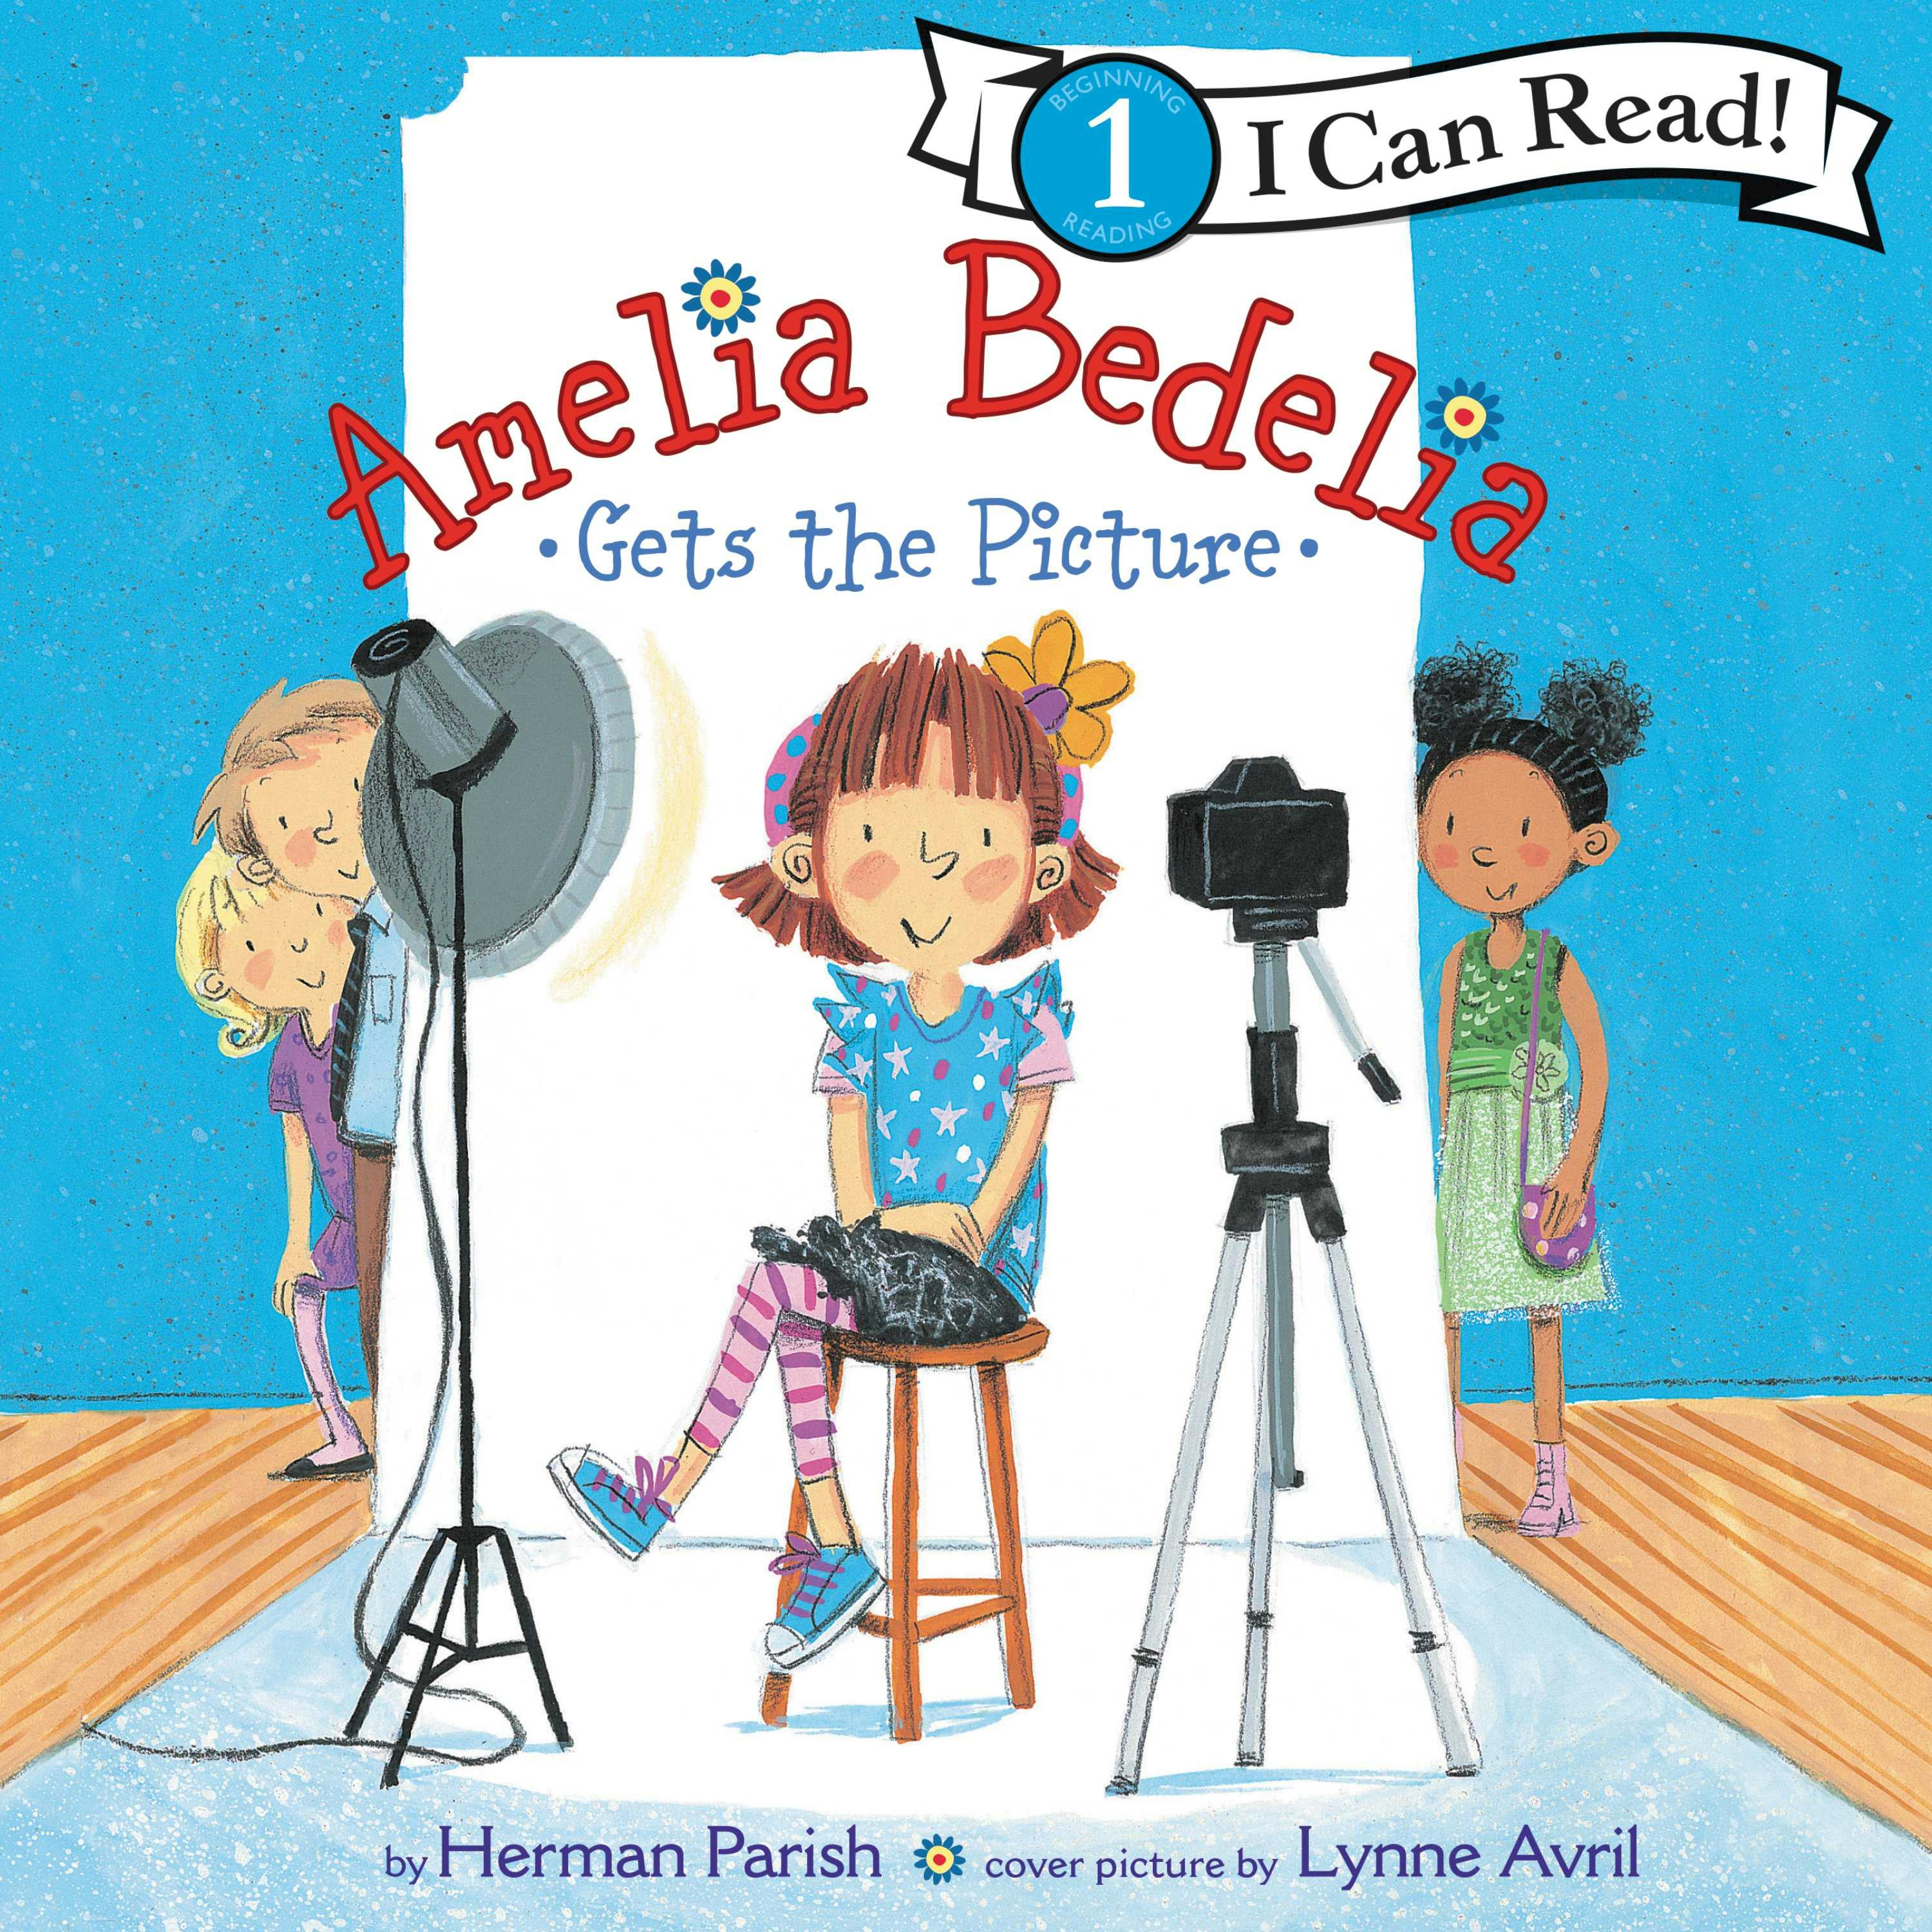 Amelia Bedelia Gets the Picture - Herman Parish